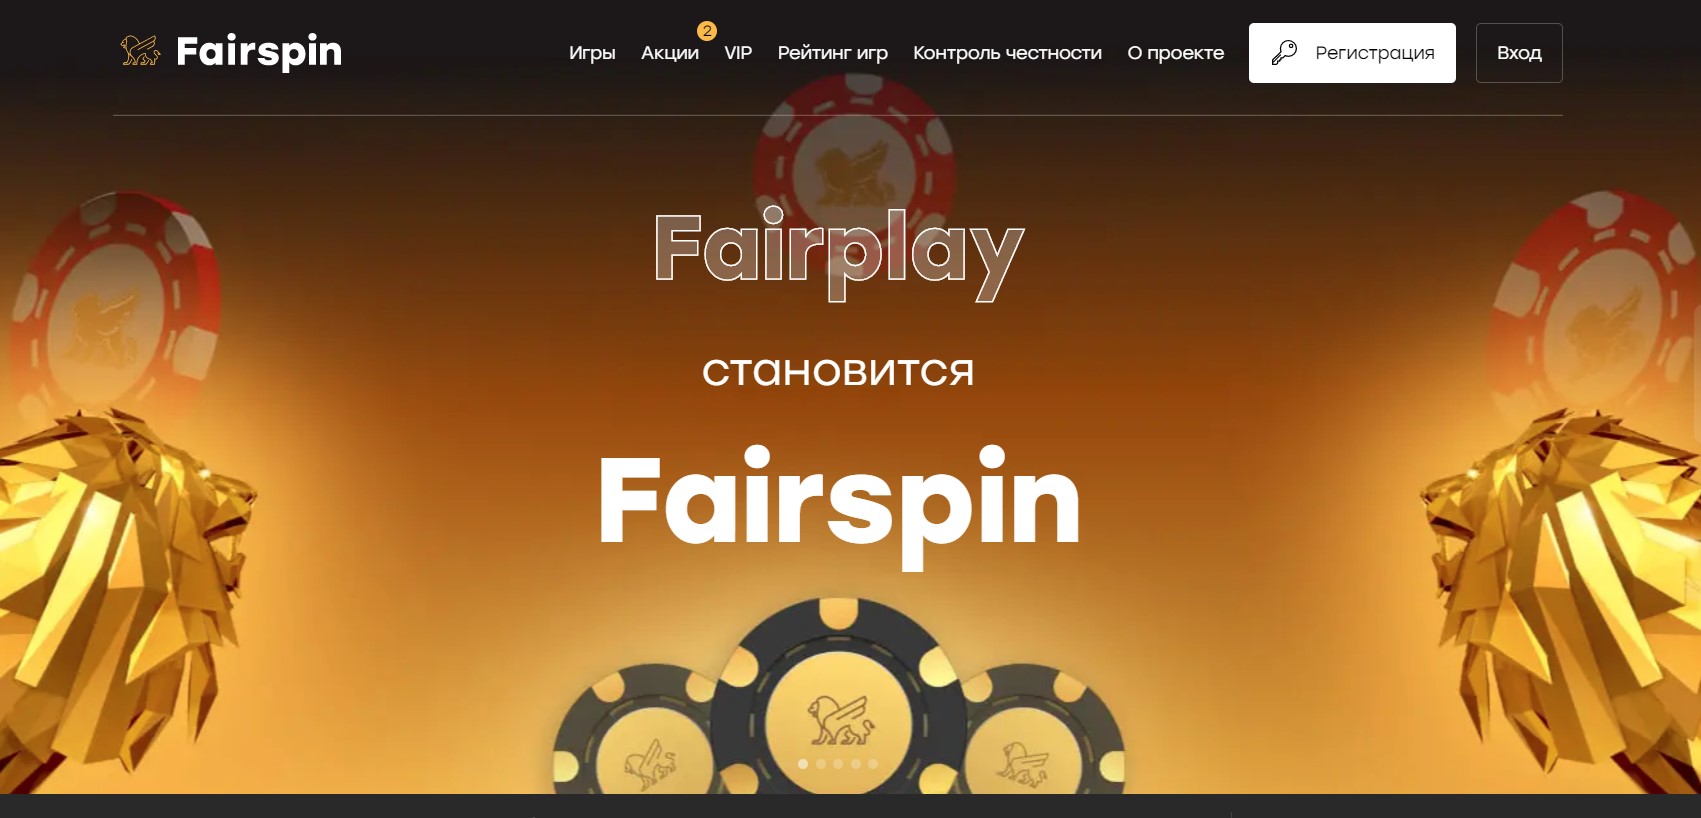 fair spin casino бездепозитный бонус